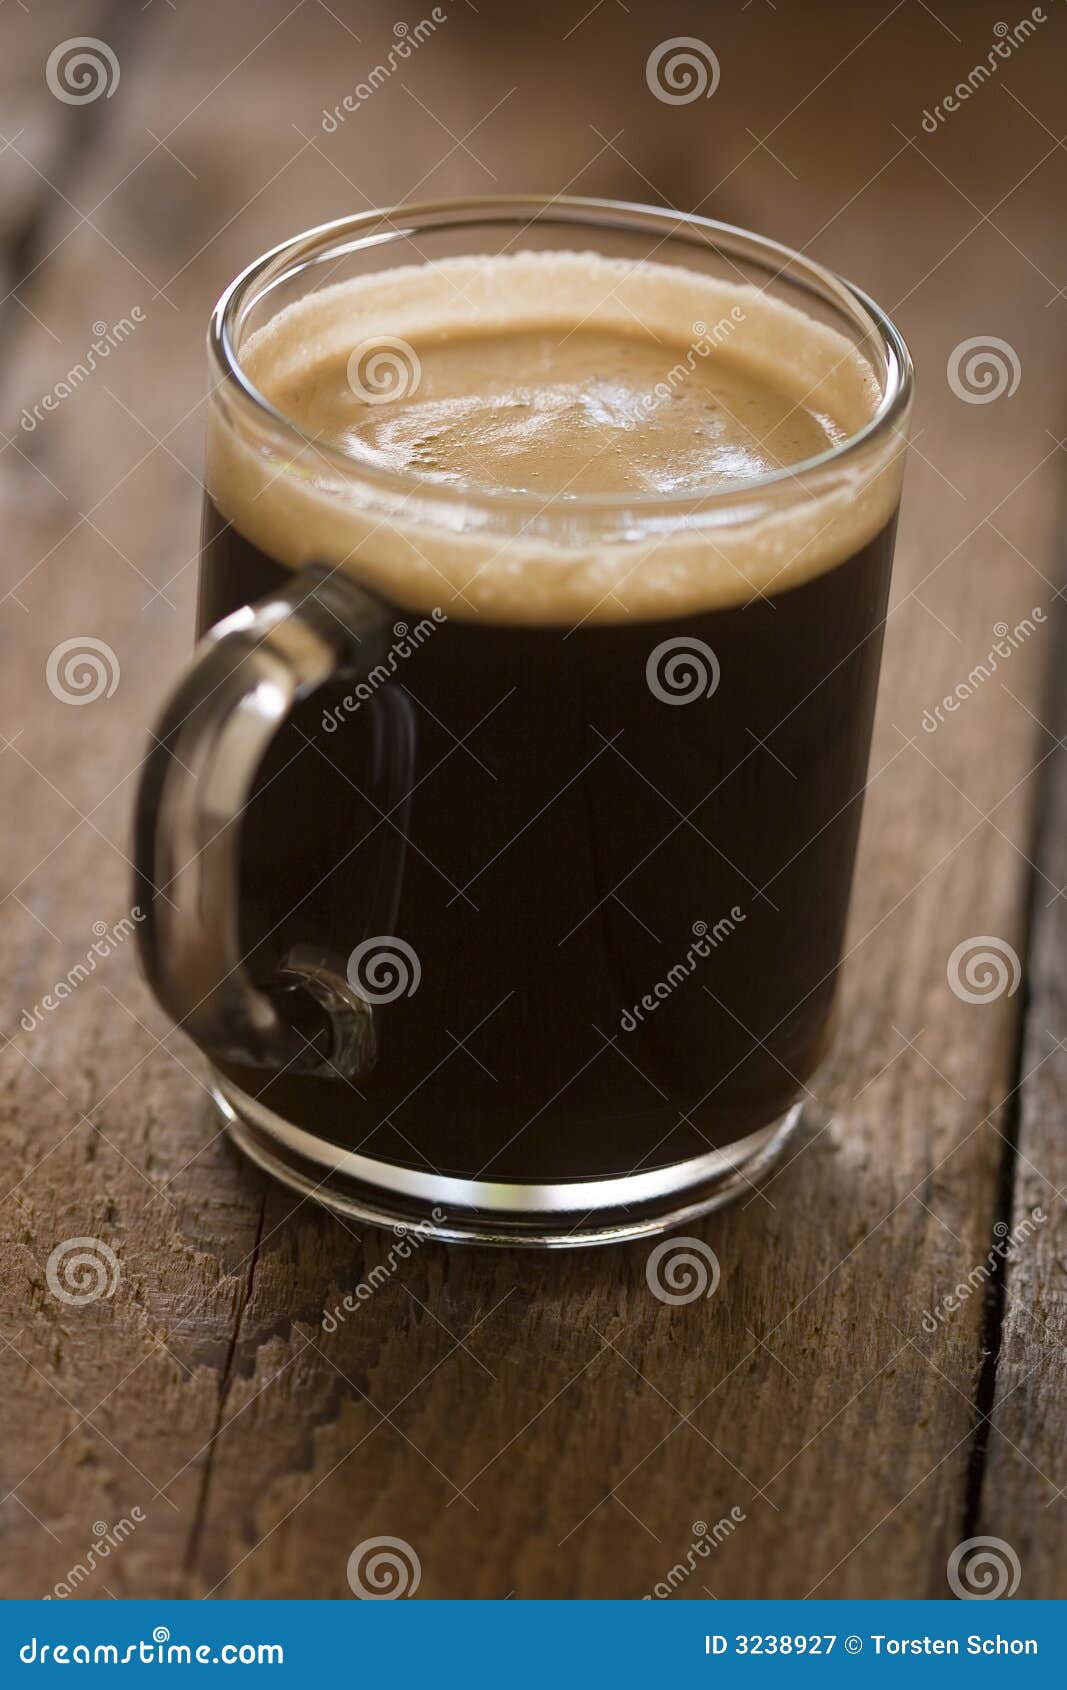 coffee crema